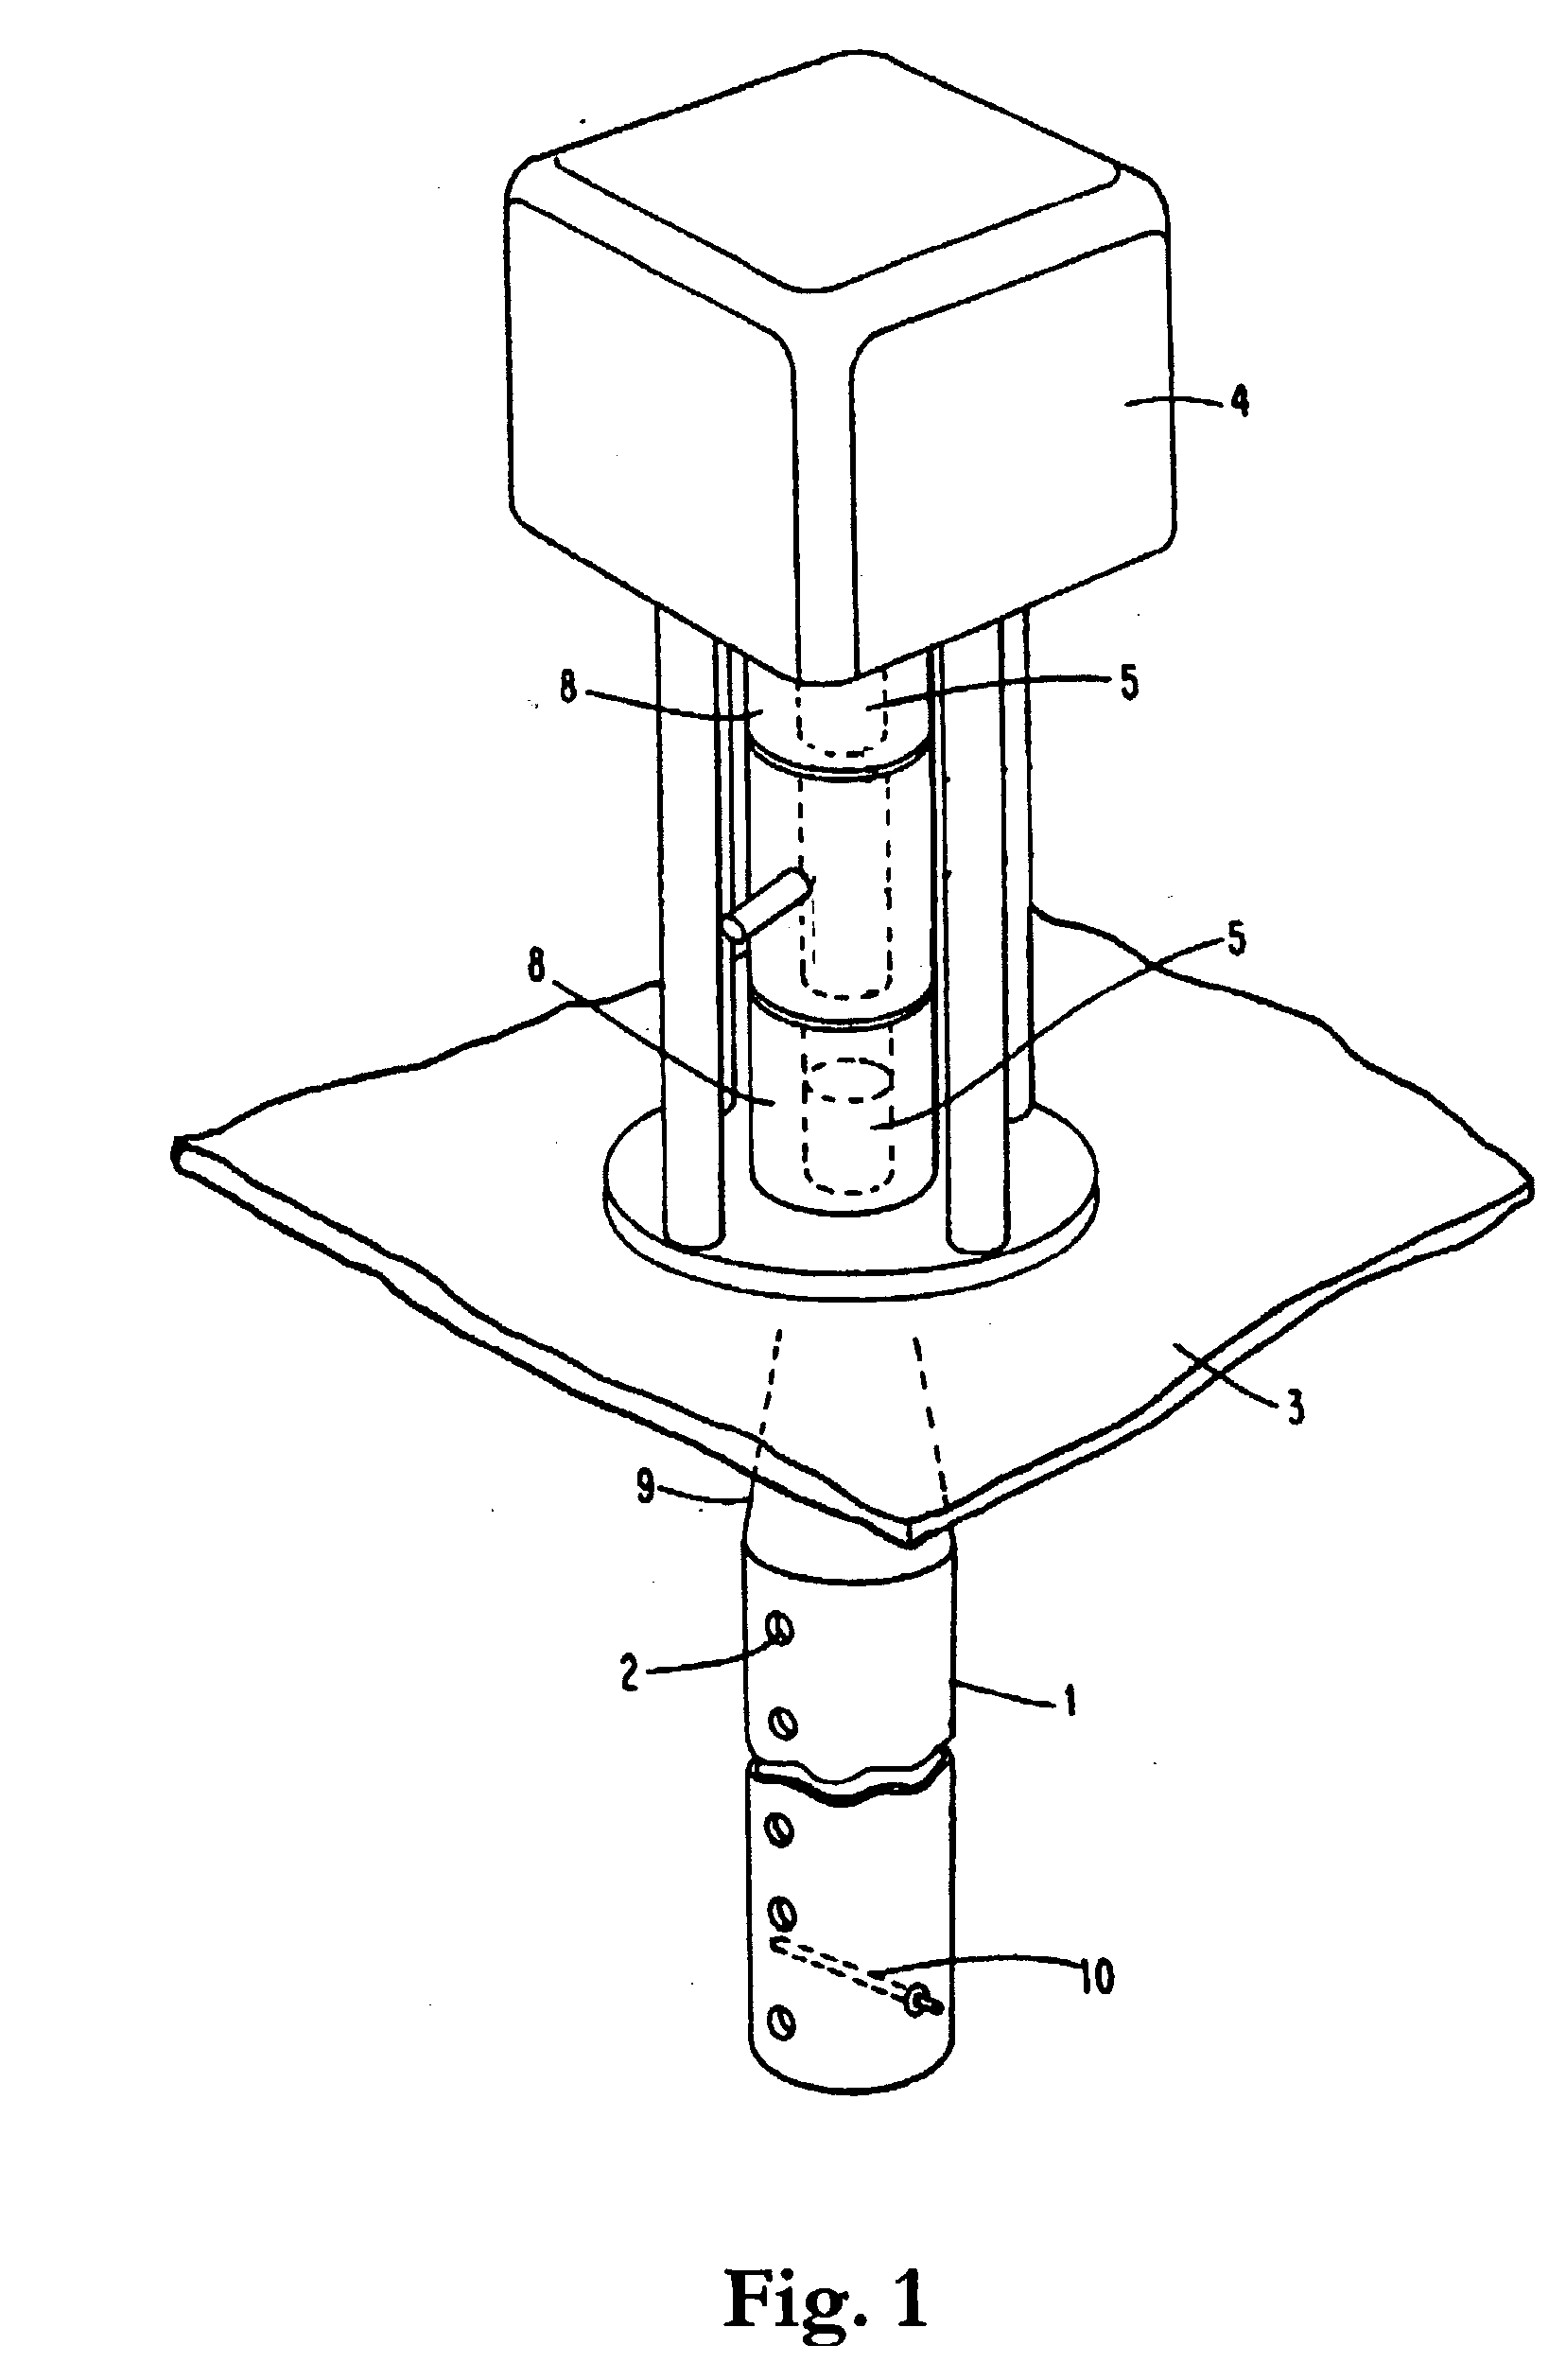 Apparatus and method for radar-based level gauging